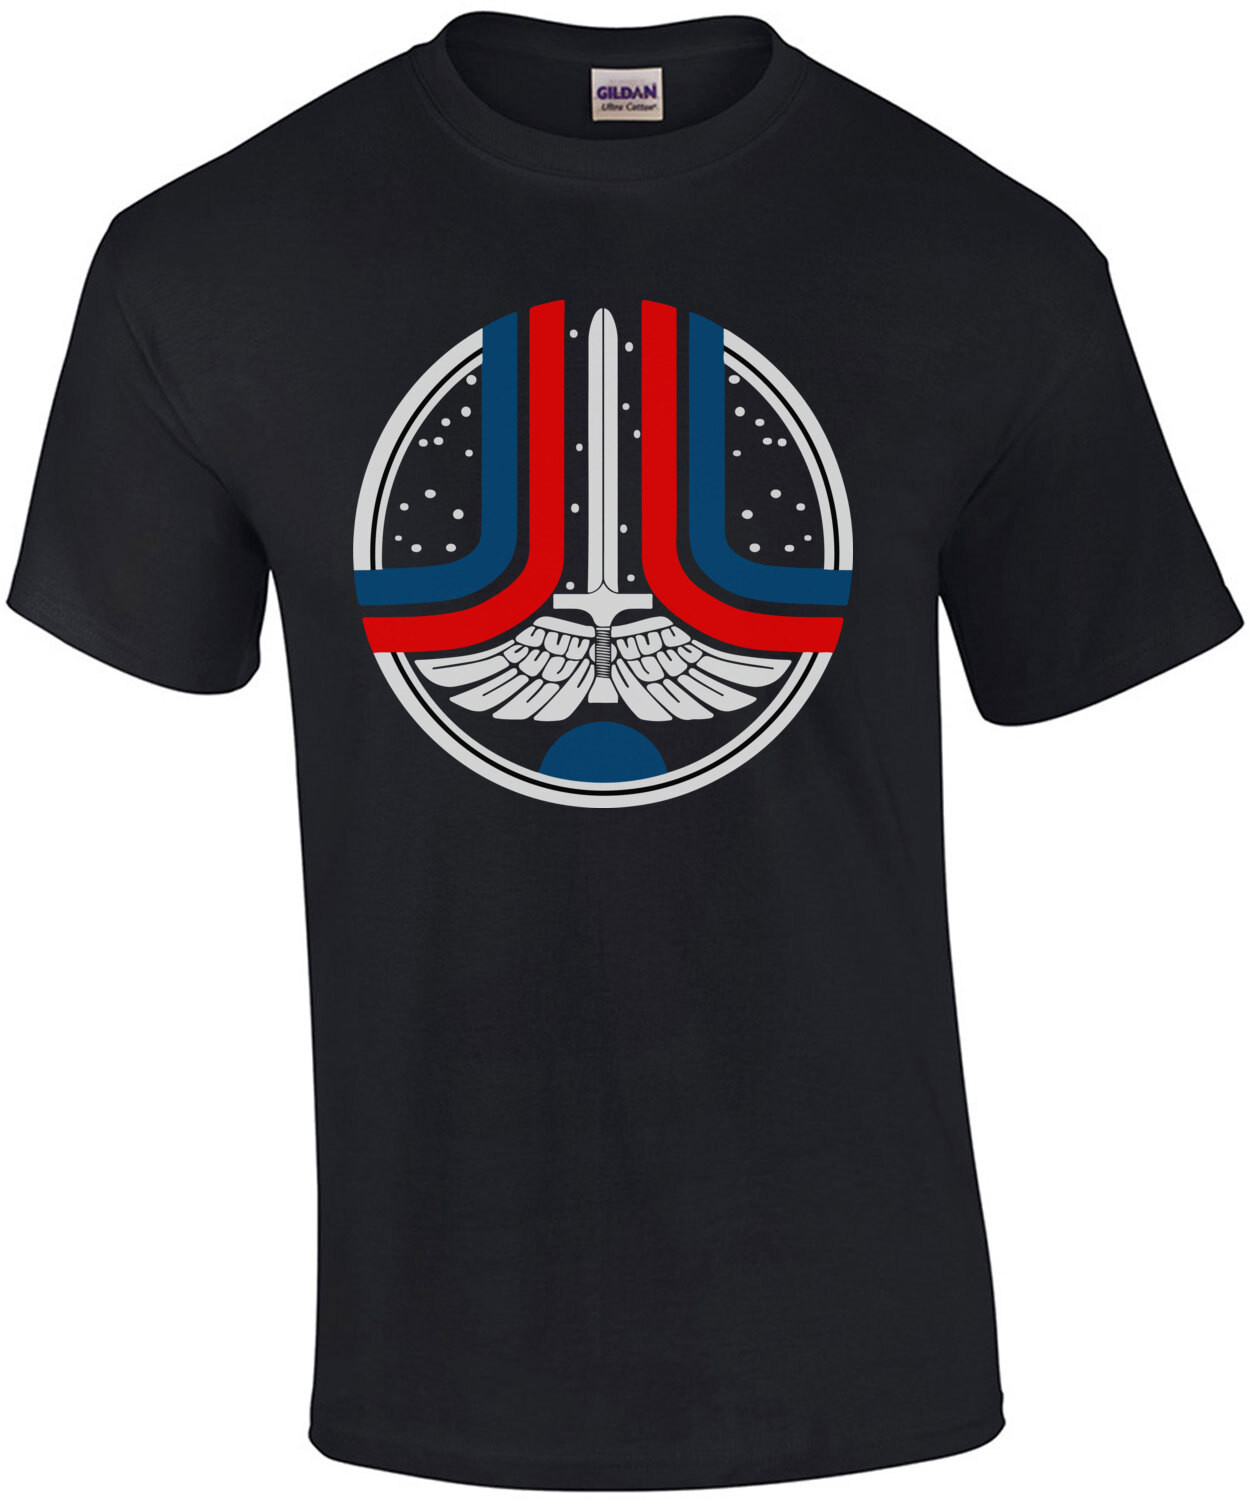 The Last Starfighter - 80's T-Shirt